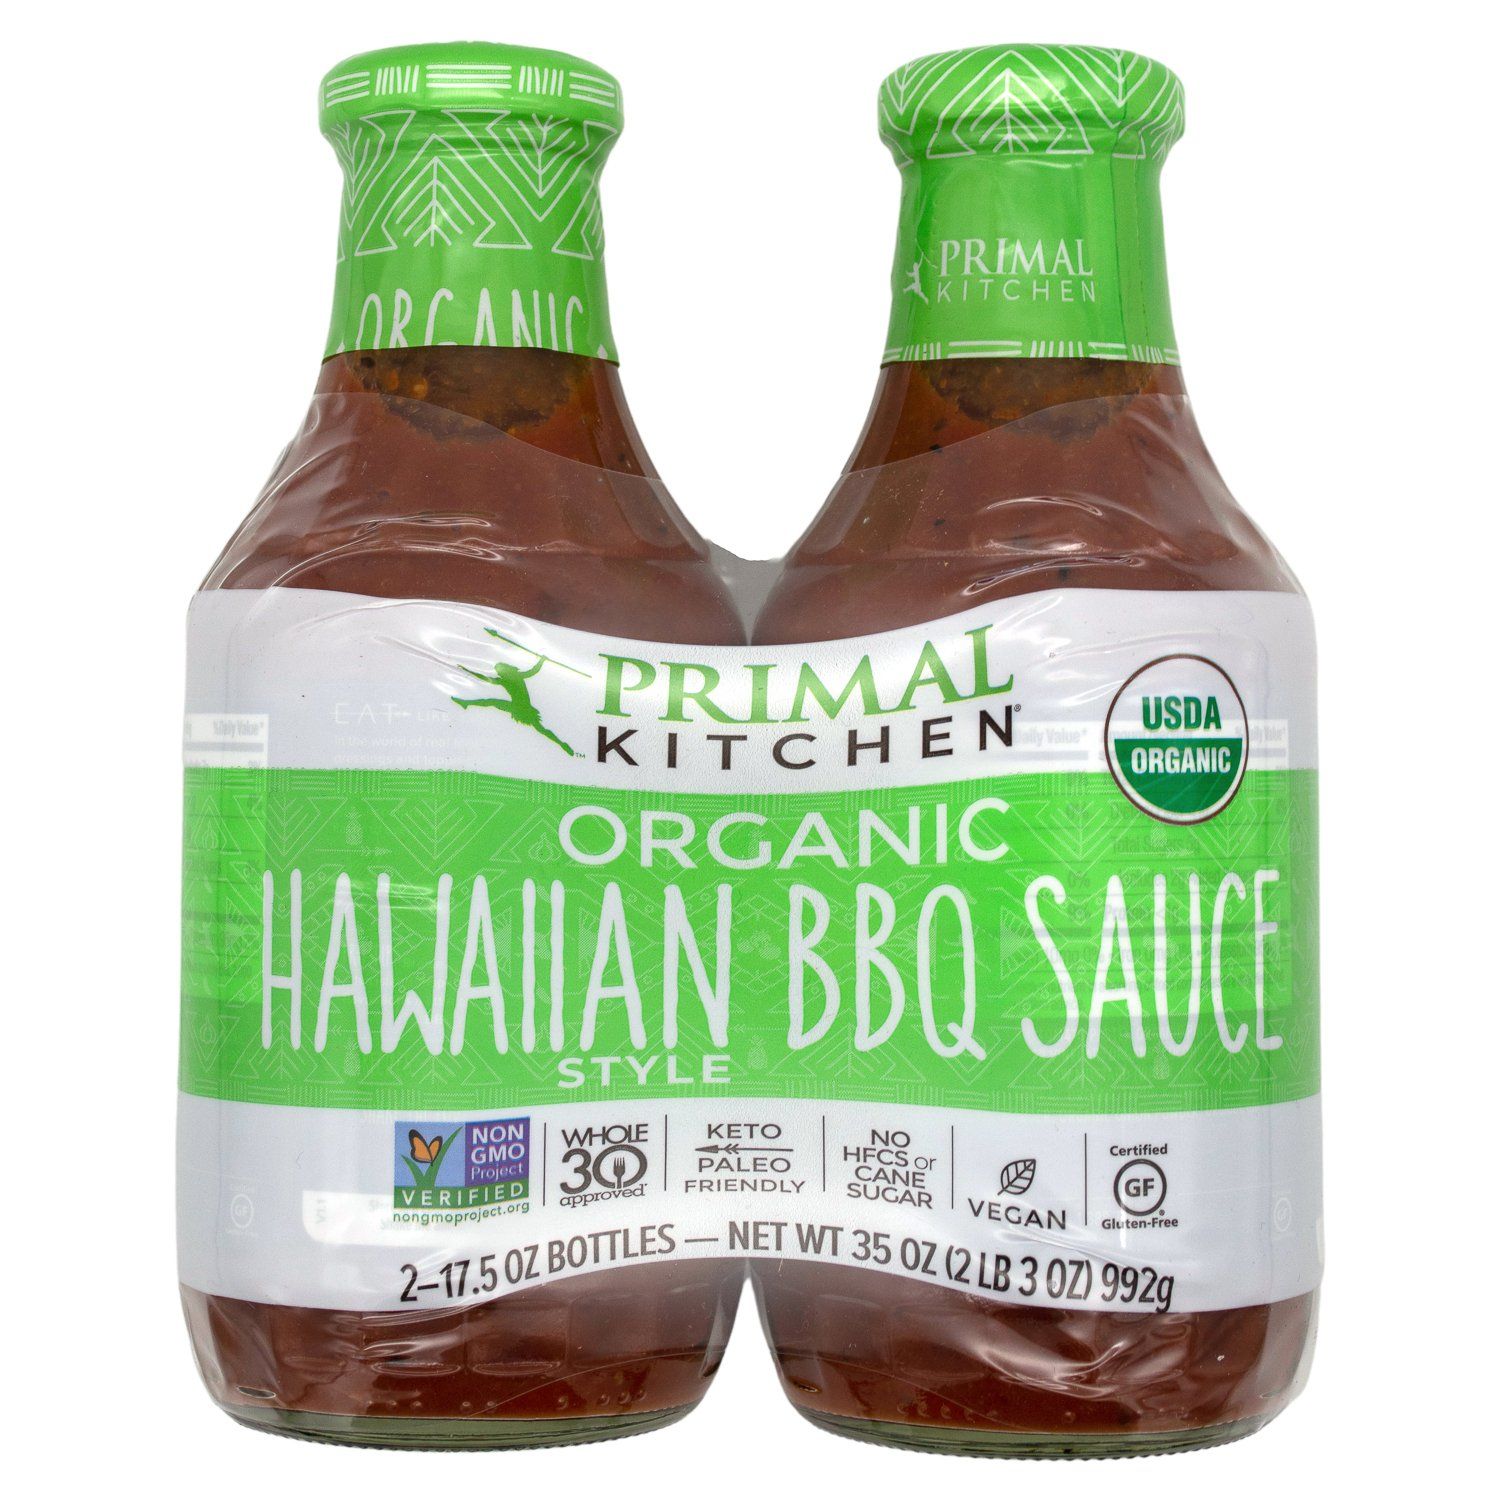 https://cdn.shopify.com/s/files/1/0257/8038/7925/products/primal-kitchen-organic-bbq-sauce-primal-kitchen-hawaiian-175-oz-2-count-686590.jpg